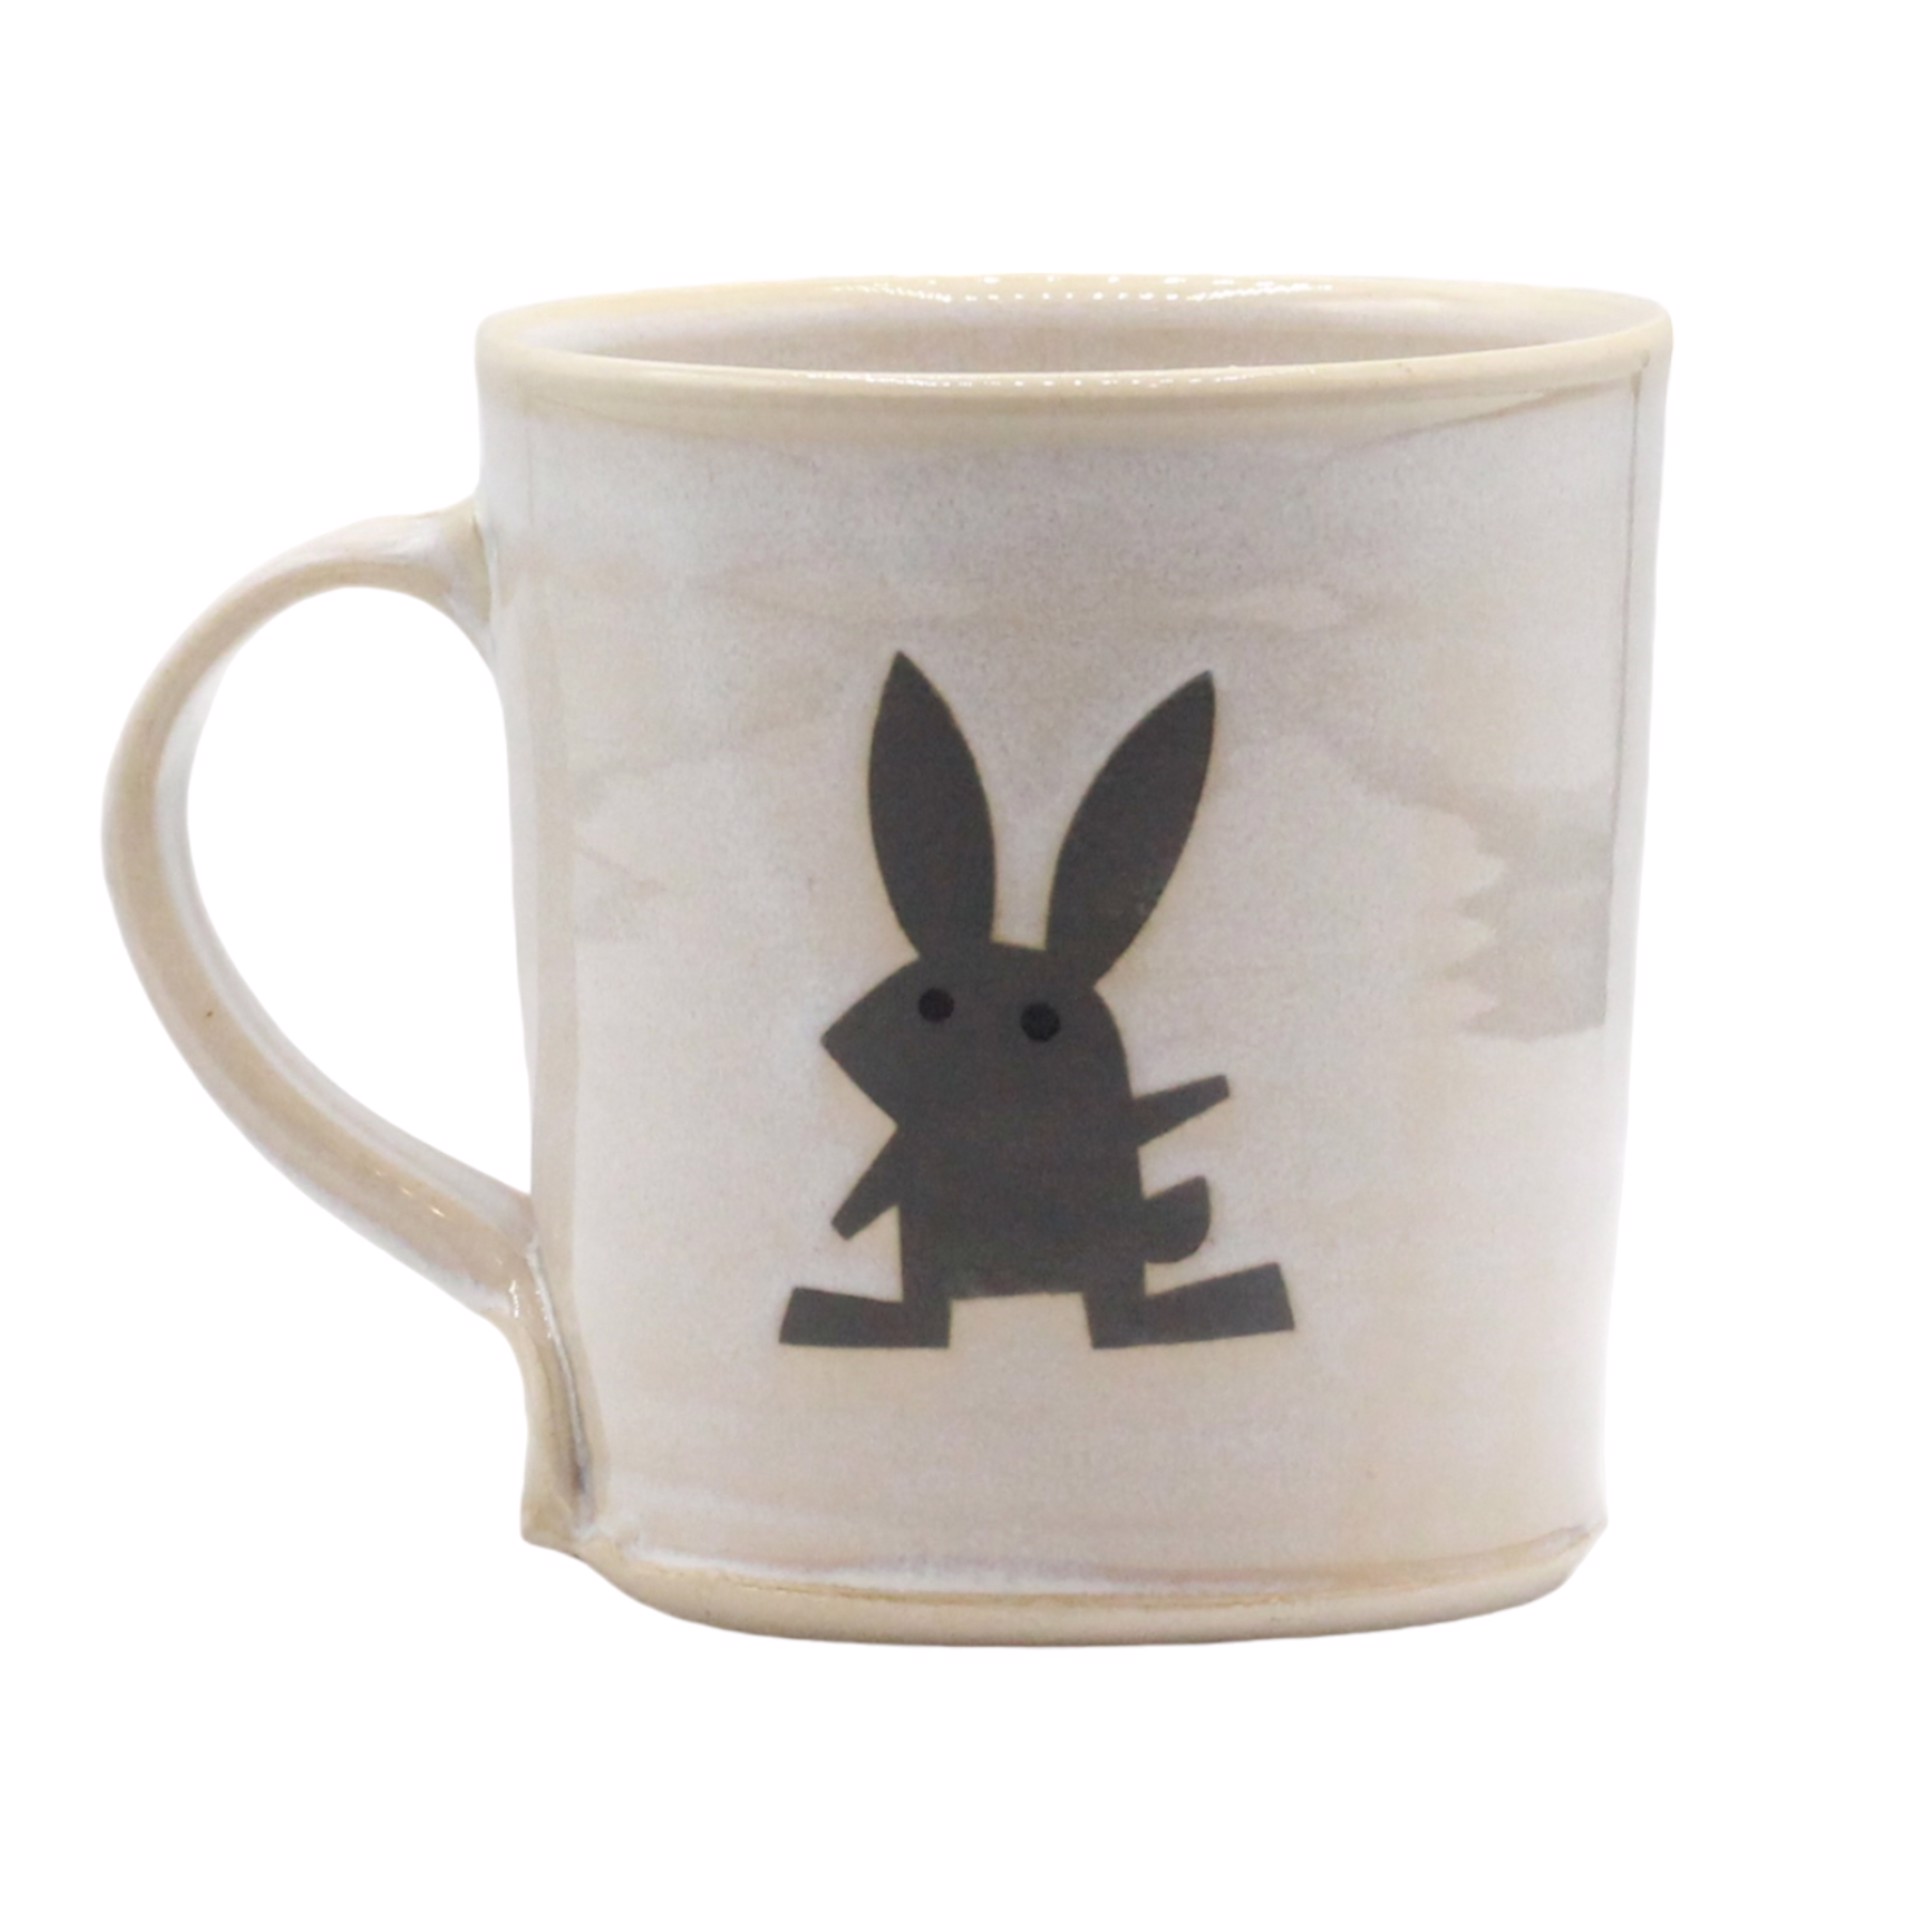 Rowdy the Rabbit Mug by Stephen Mullins